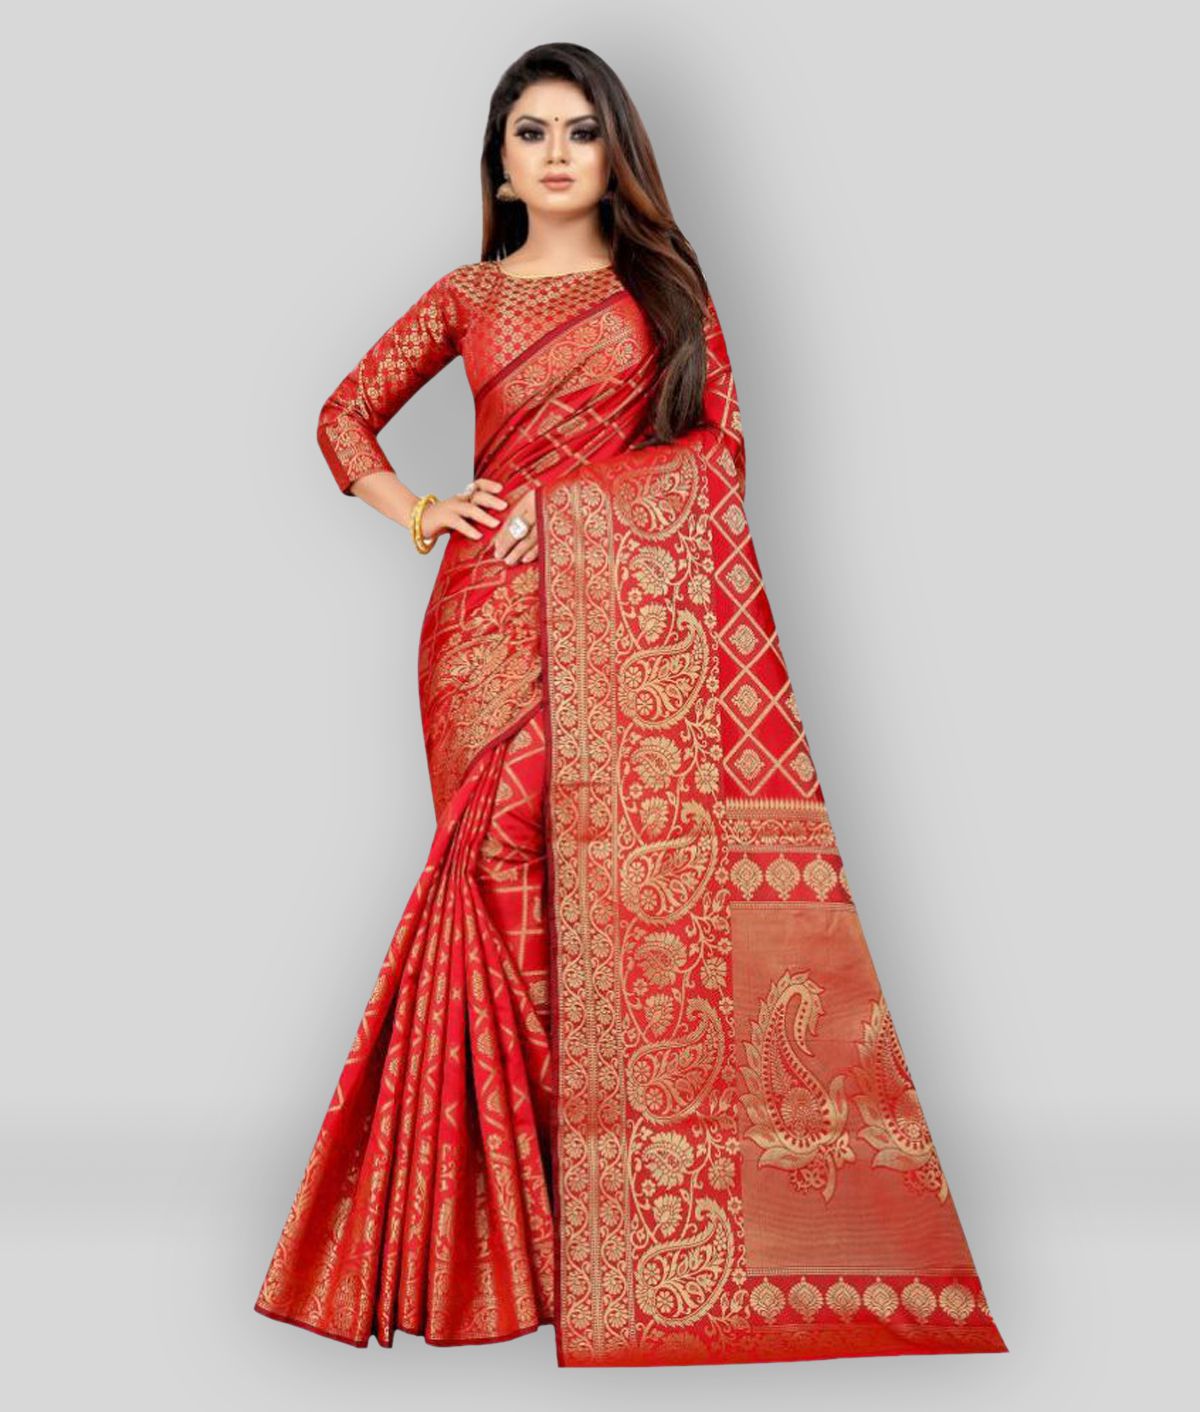 Gazal Fashions - Red Banarasi Silk Saree With Blouse Piece (Pack of 1)